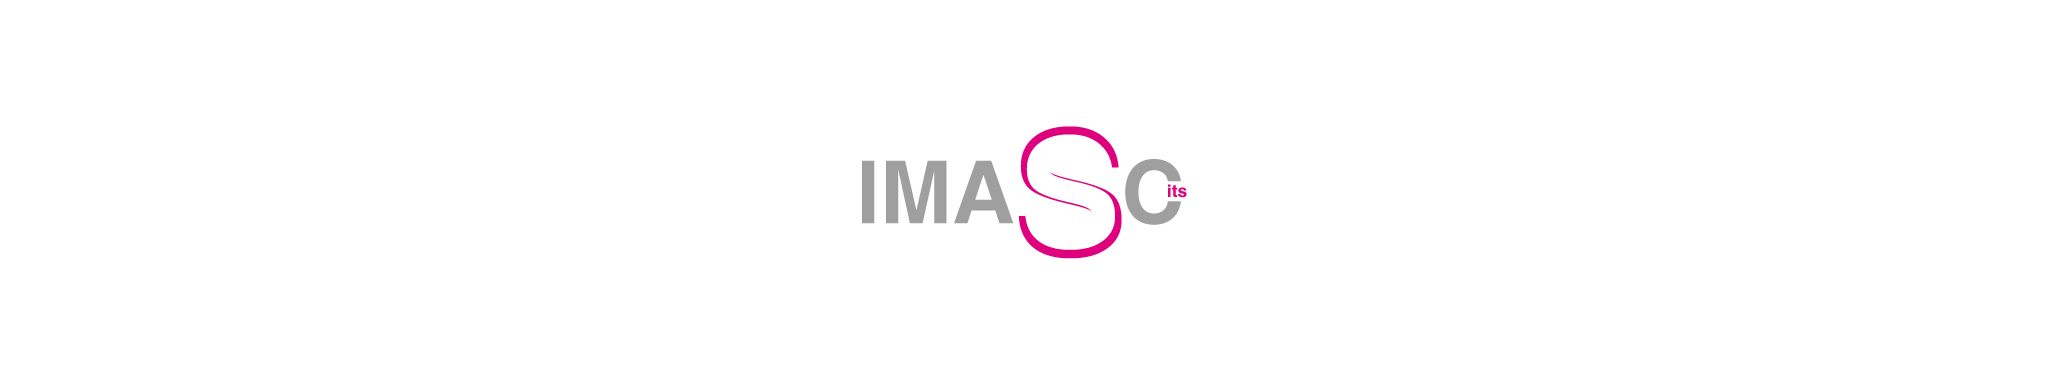 Baner profilu użytkownika IMASCits Company